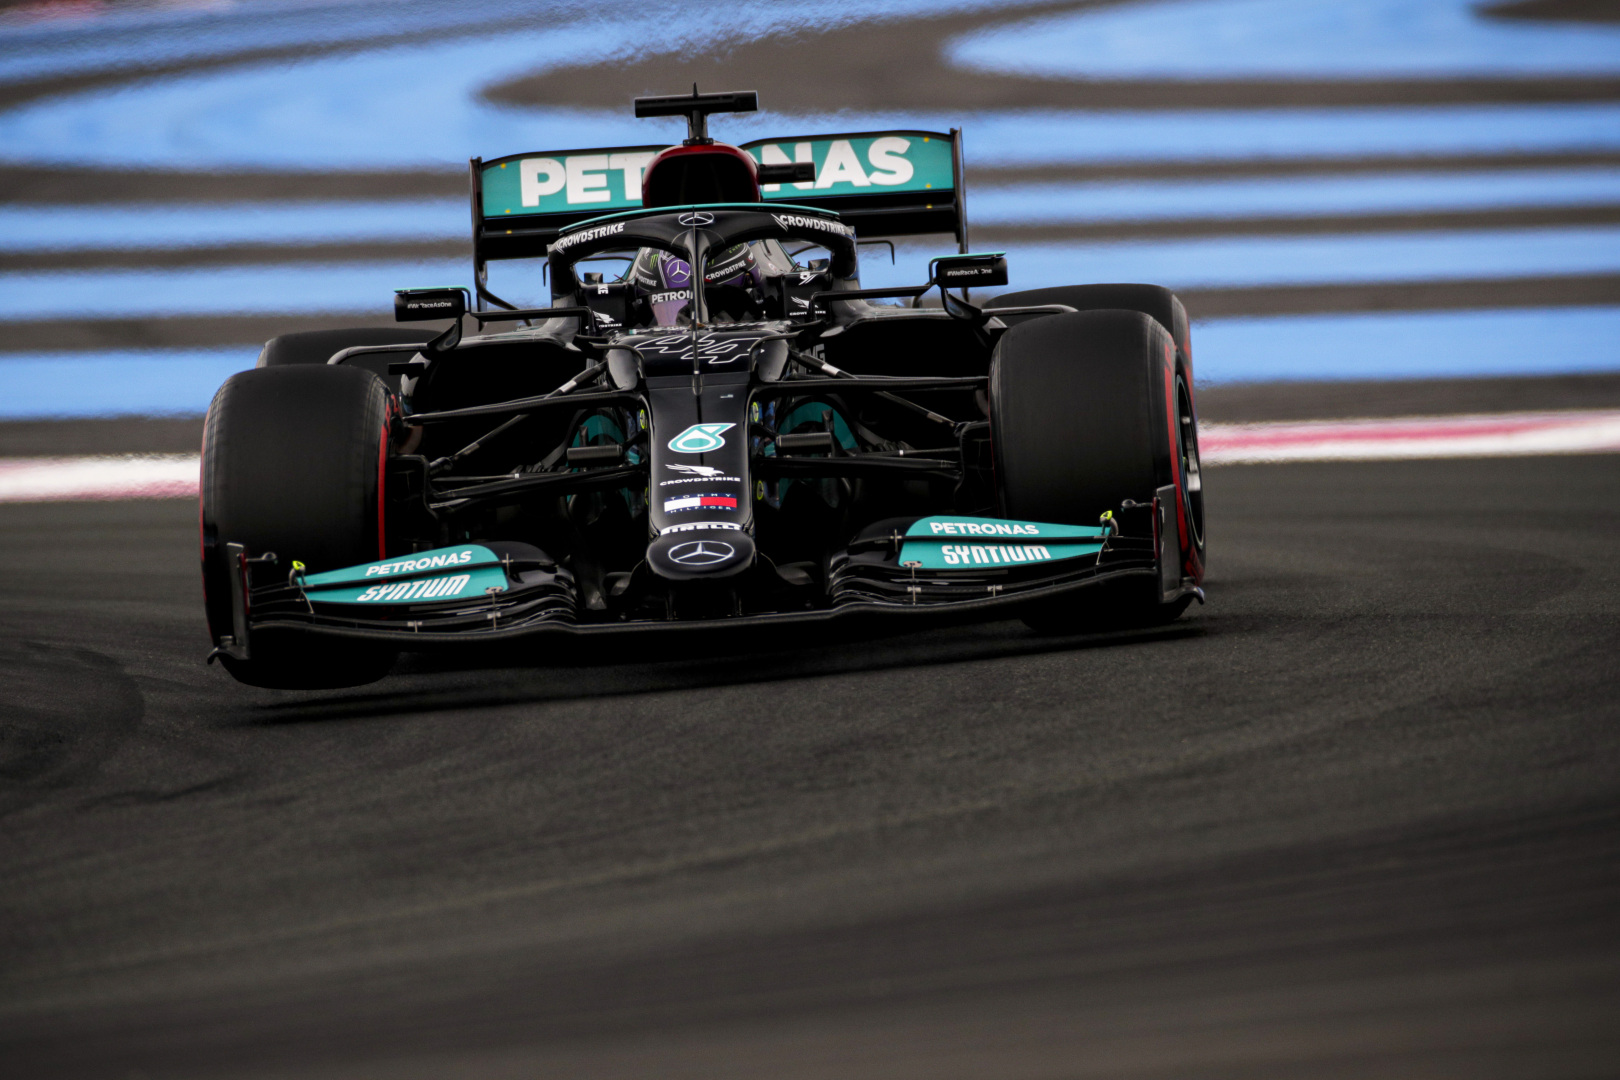 FIA susidomėjo „Mercedes“ bolido priekiniu sparnu?